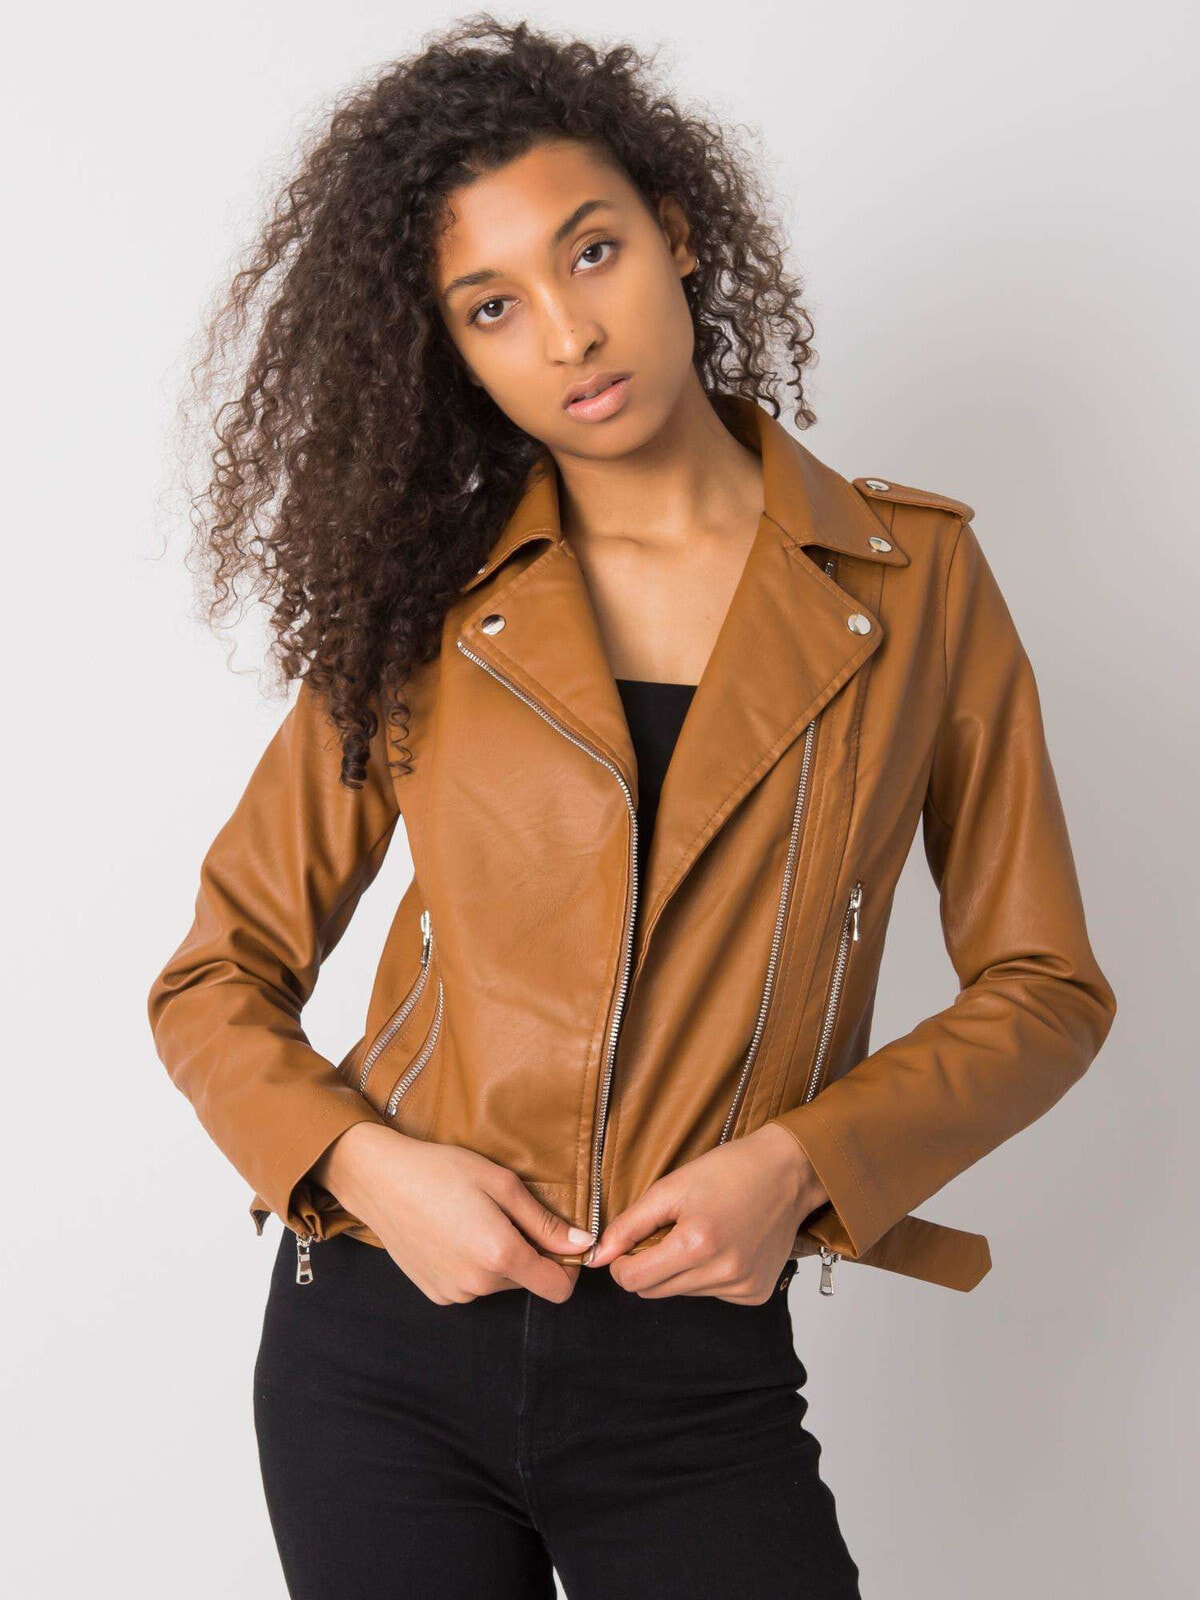 Stradivarius куртка женская коричневая кожаная. Кожаная куртка Camel. Fila куртка женская коричневая.